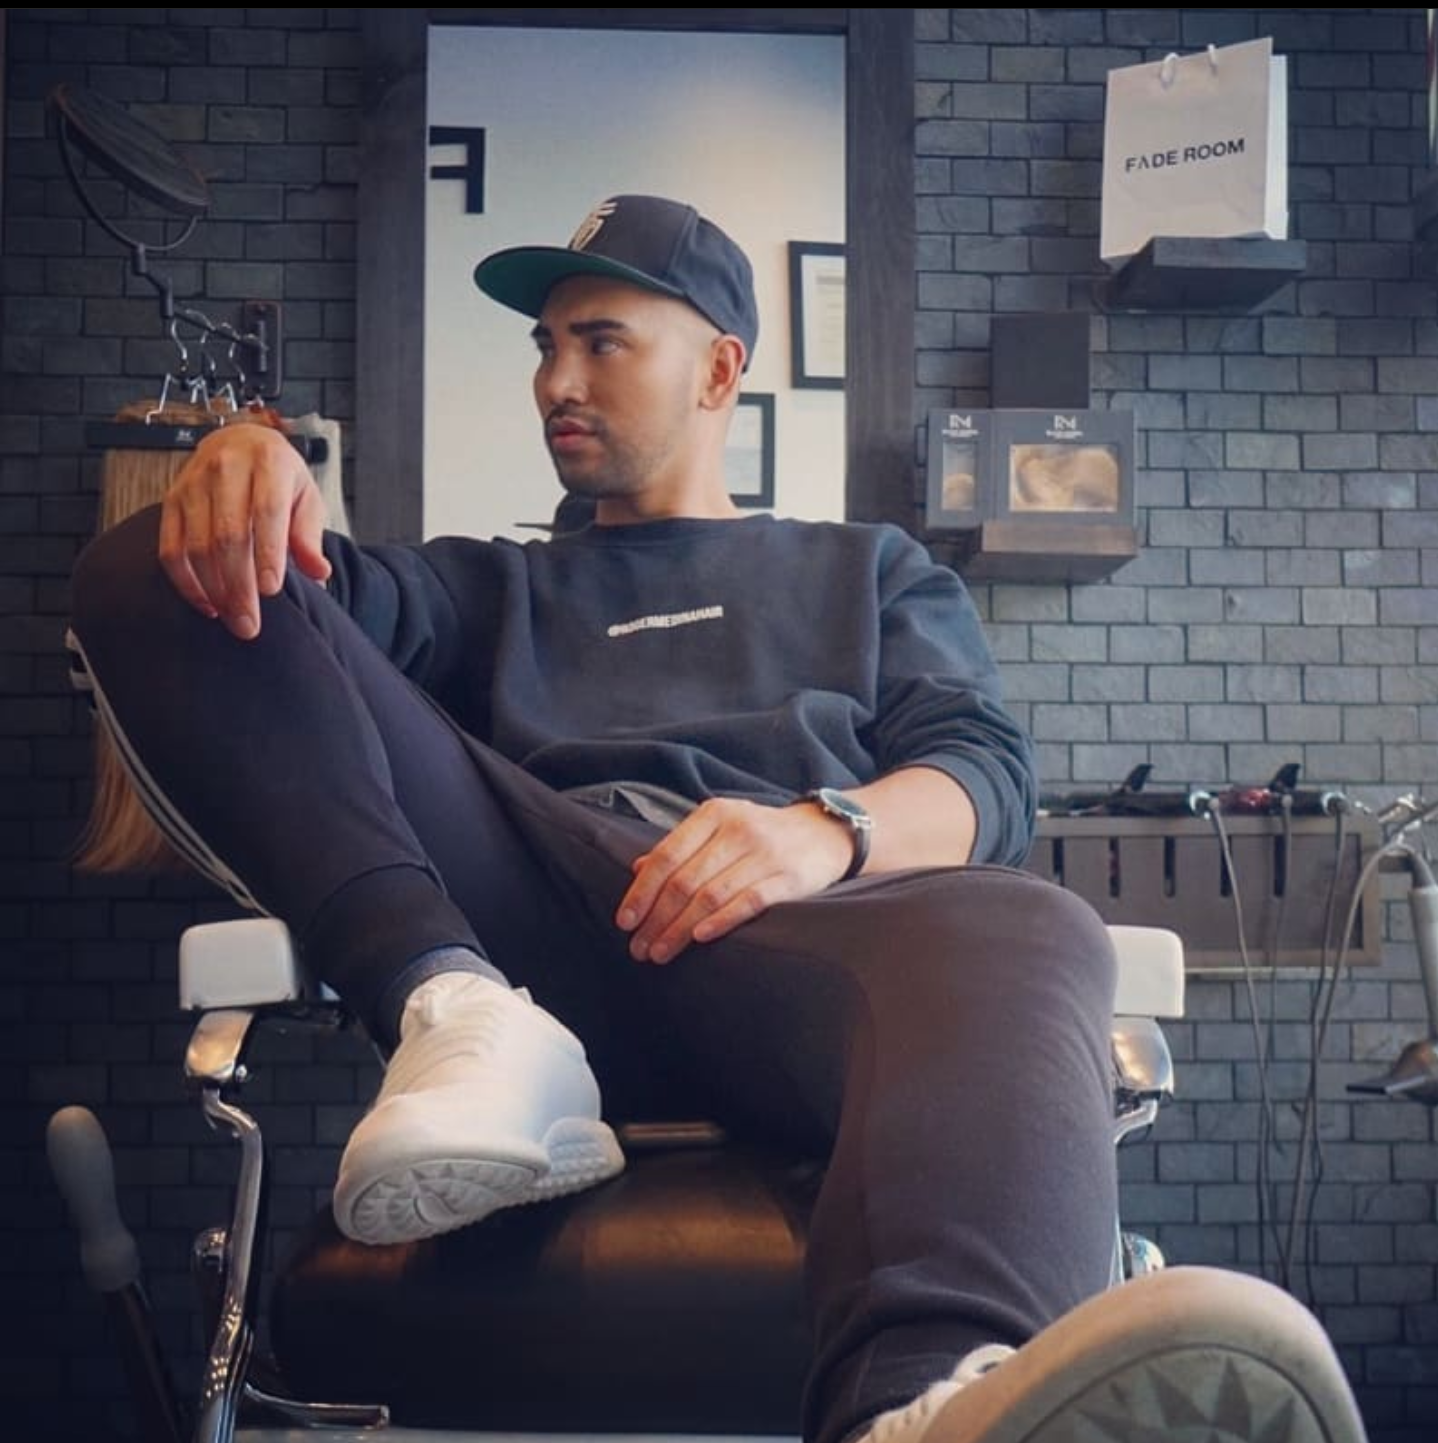 Roger Medina - Hair Extensions video shoot at Fade Room barbershop. Toronto, Ontario - Celebrity Hairstylist